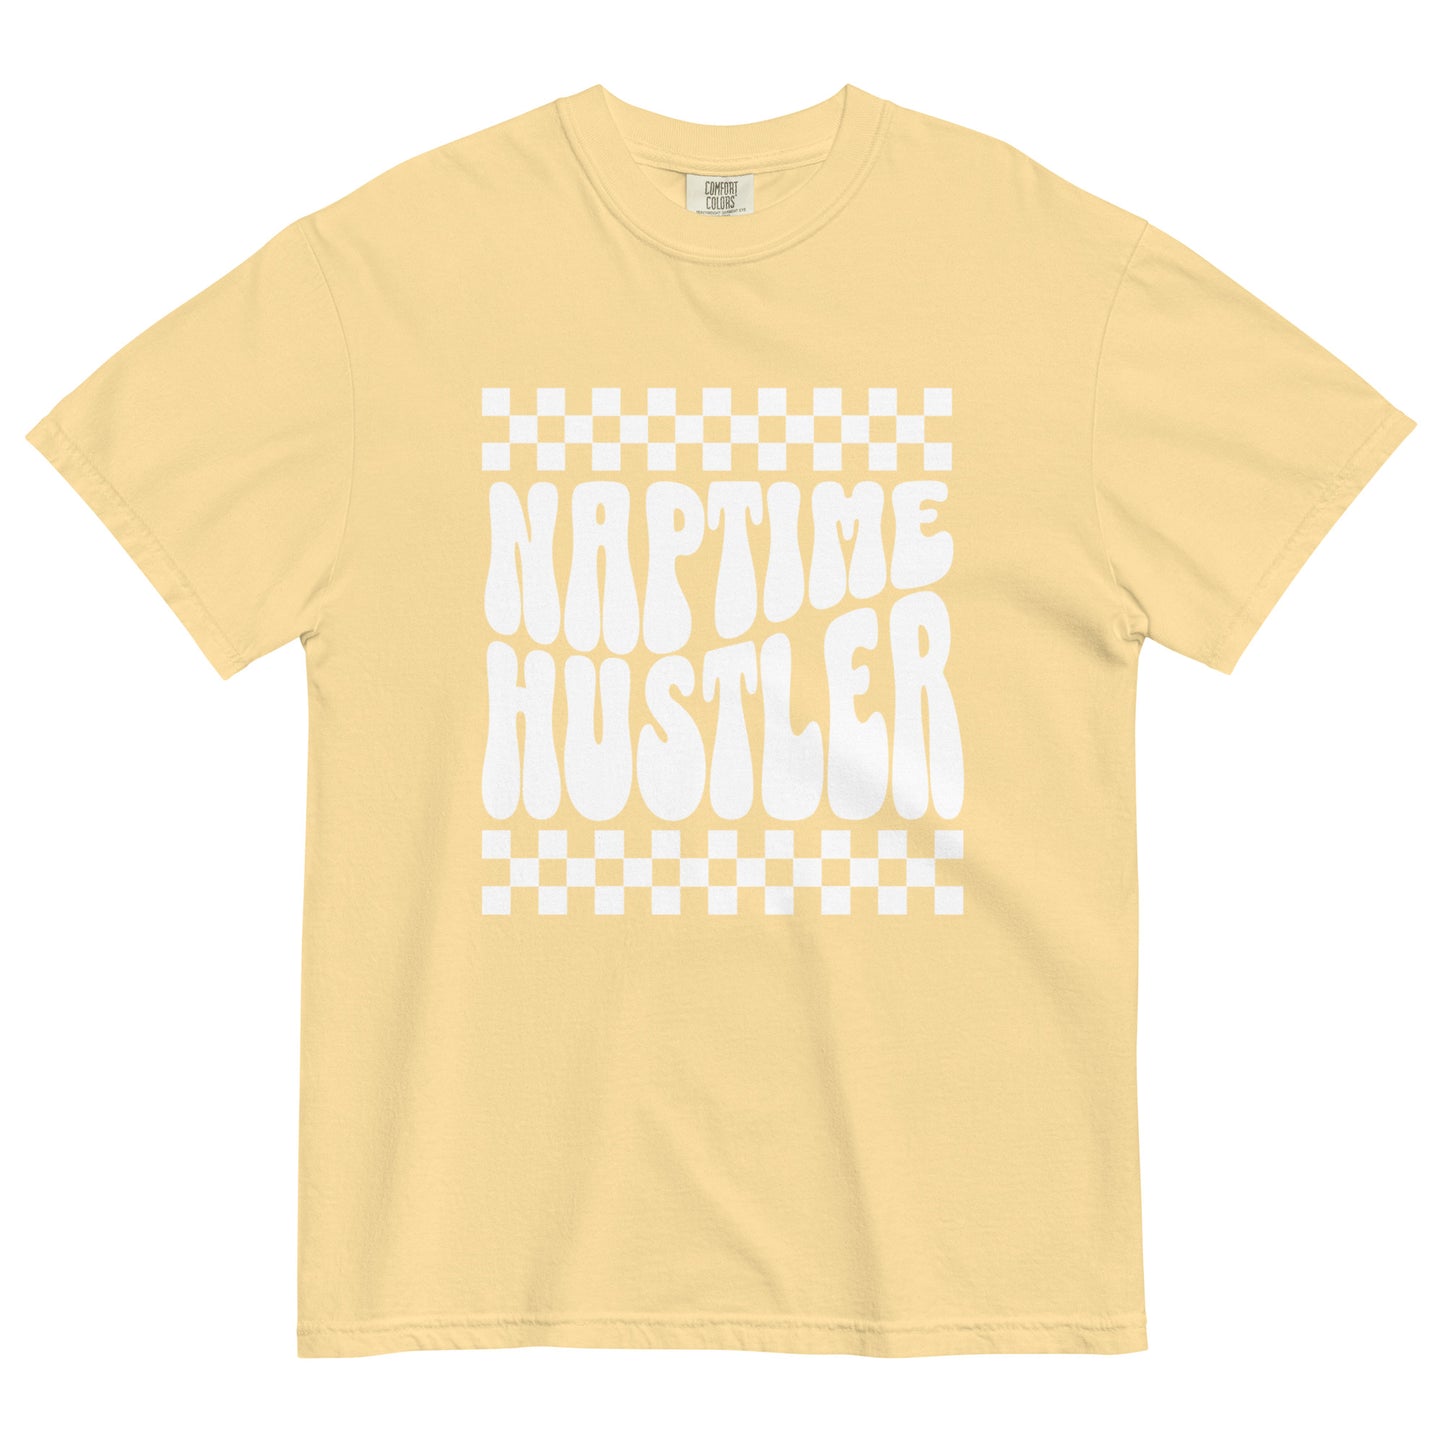 The Naptime Hustle Yellow Graphic Tee